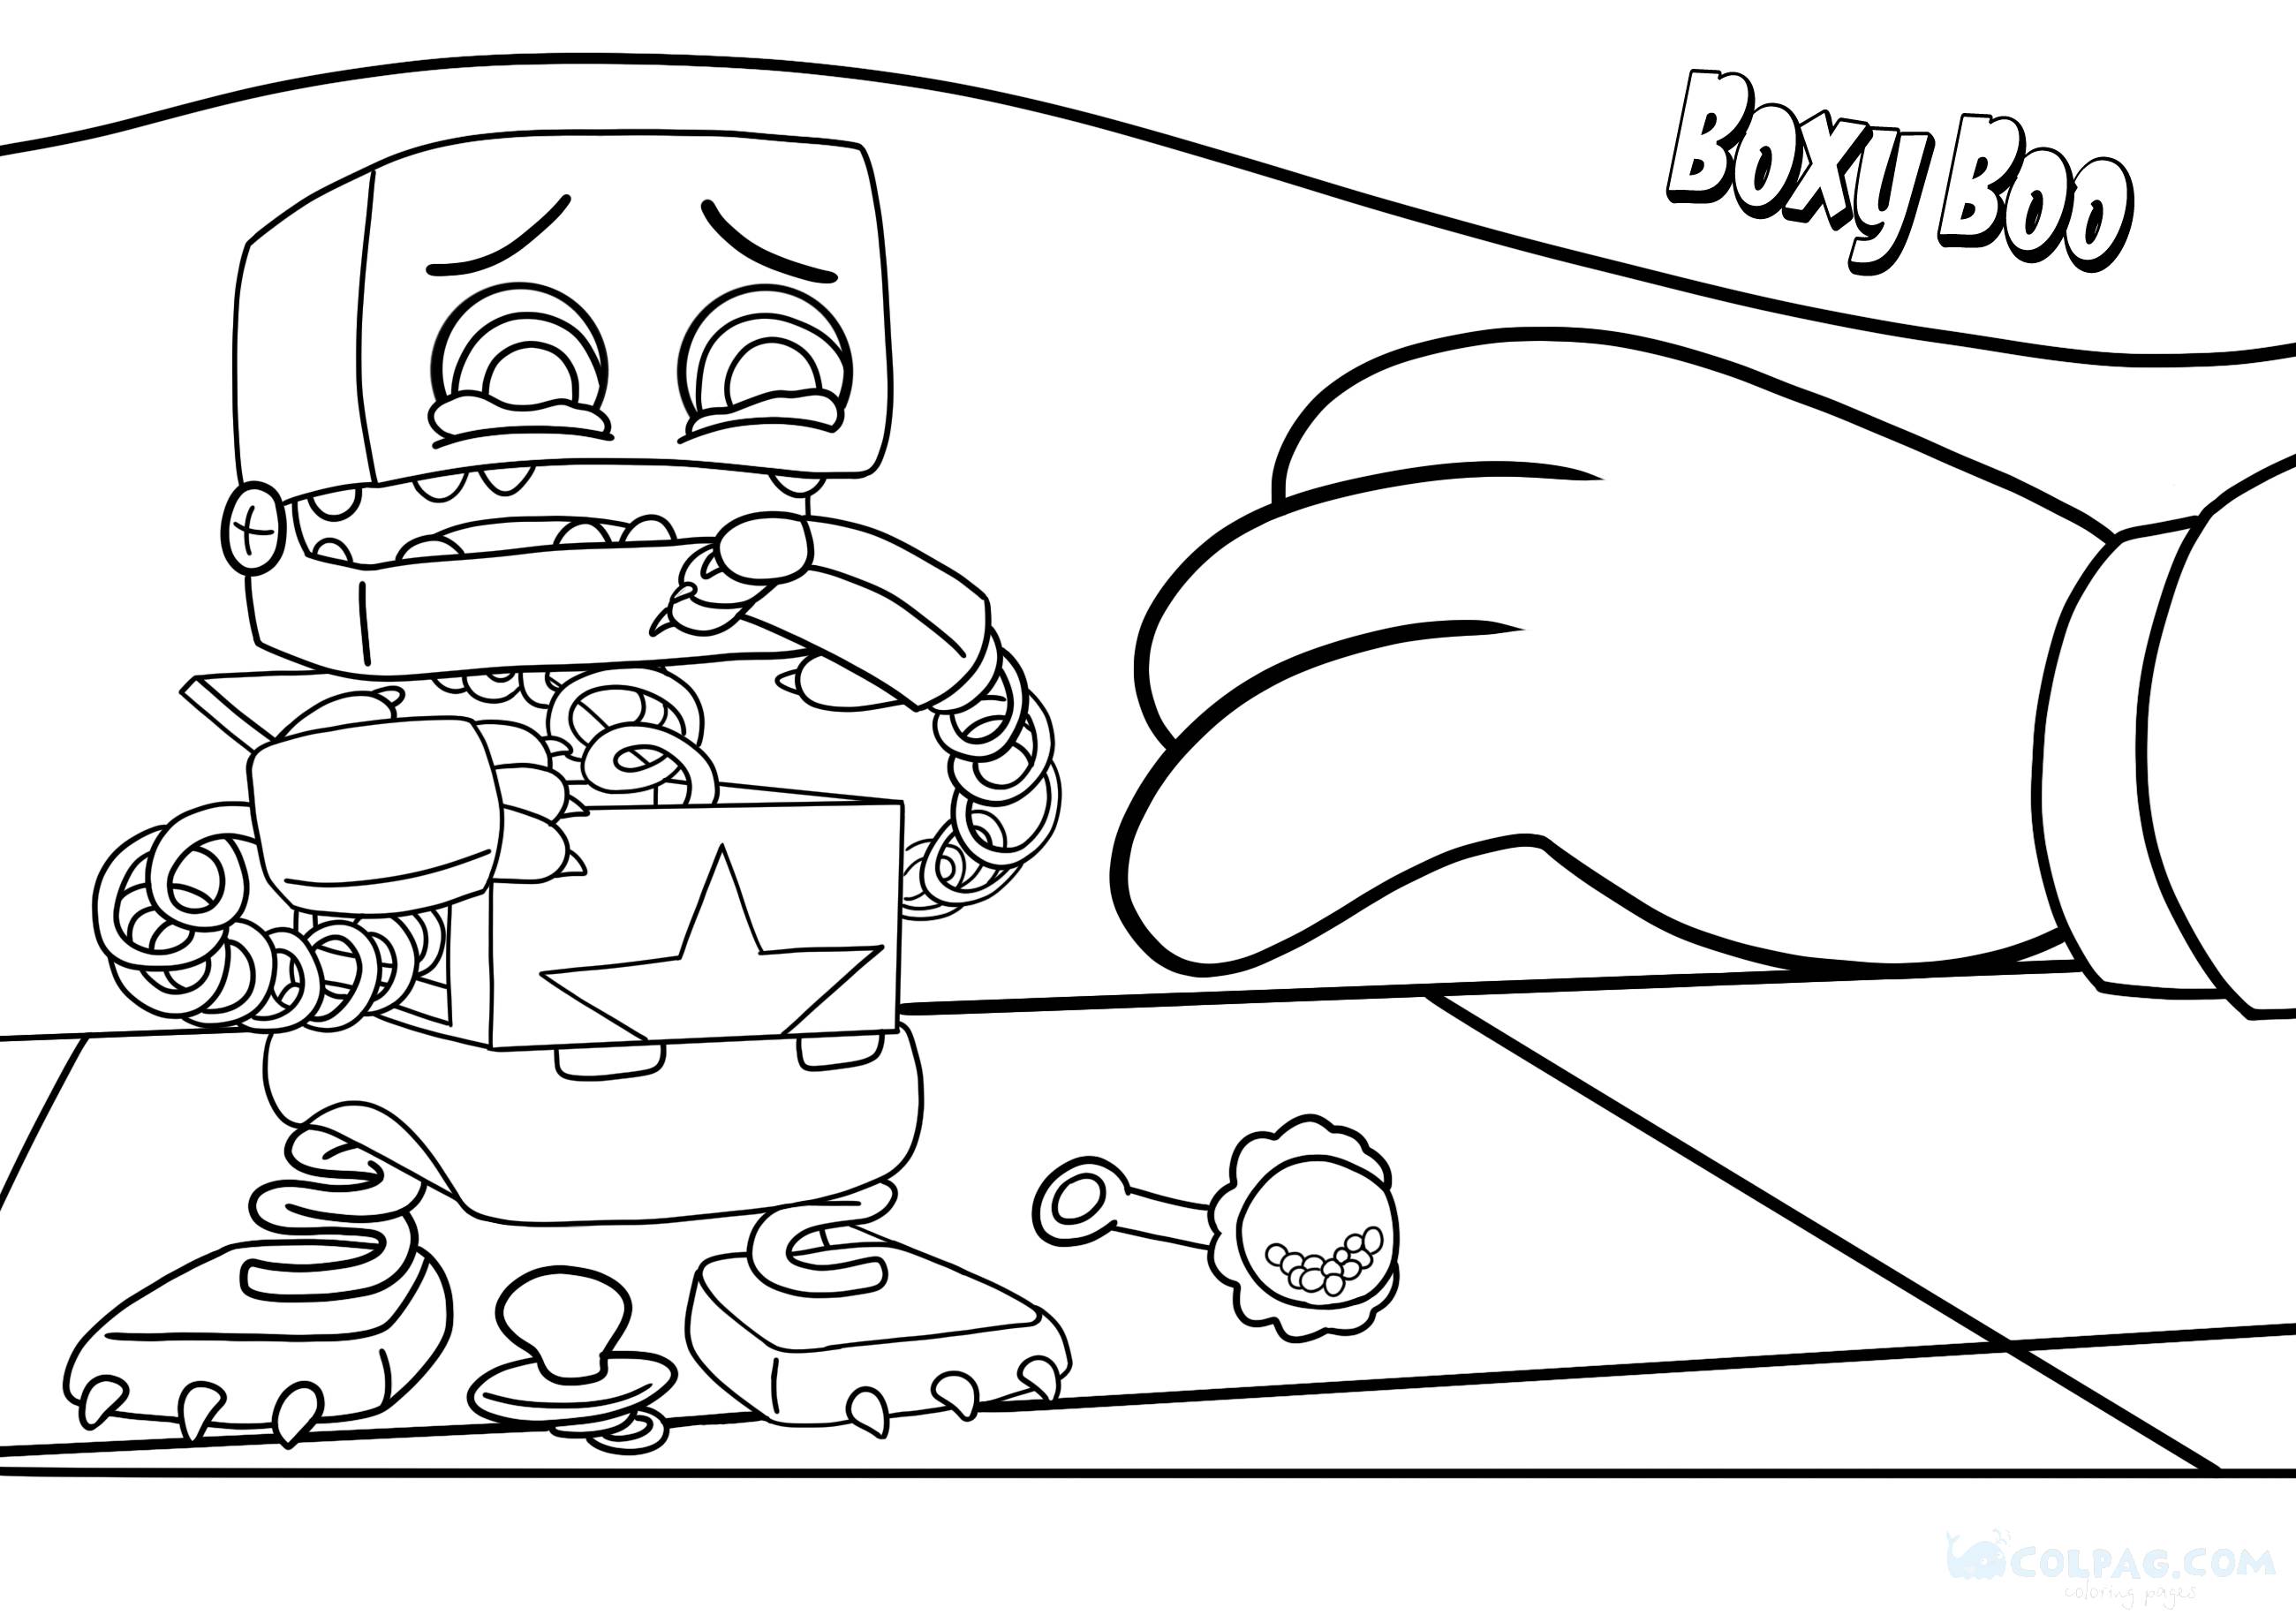 Boxy Boo ぬりえ (プロジェクト: Playtime)